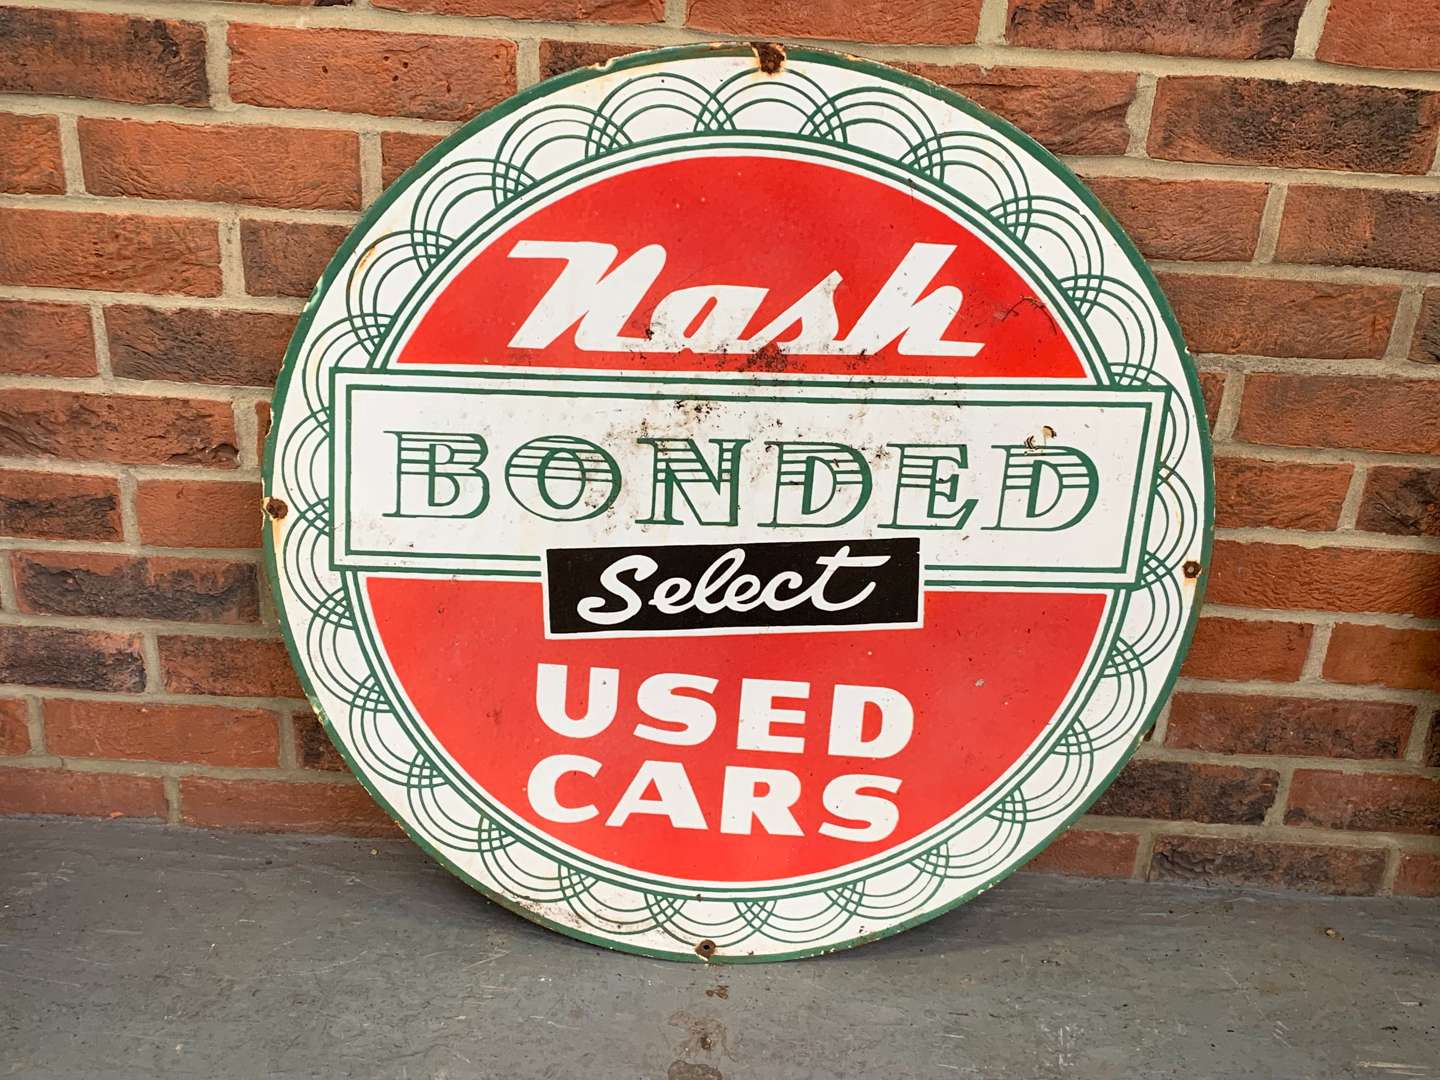 <p>Nash Bonded Used Cars Circular Enamel Sign</p>